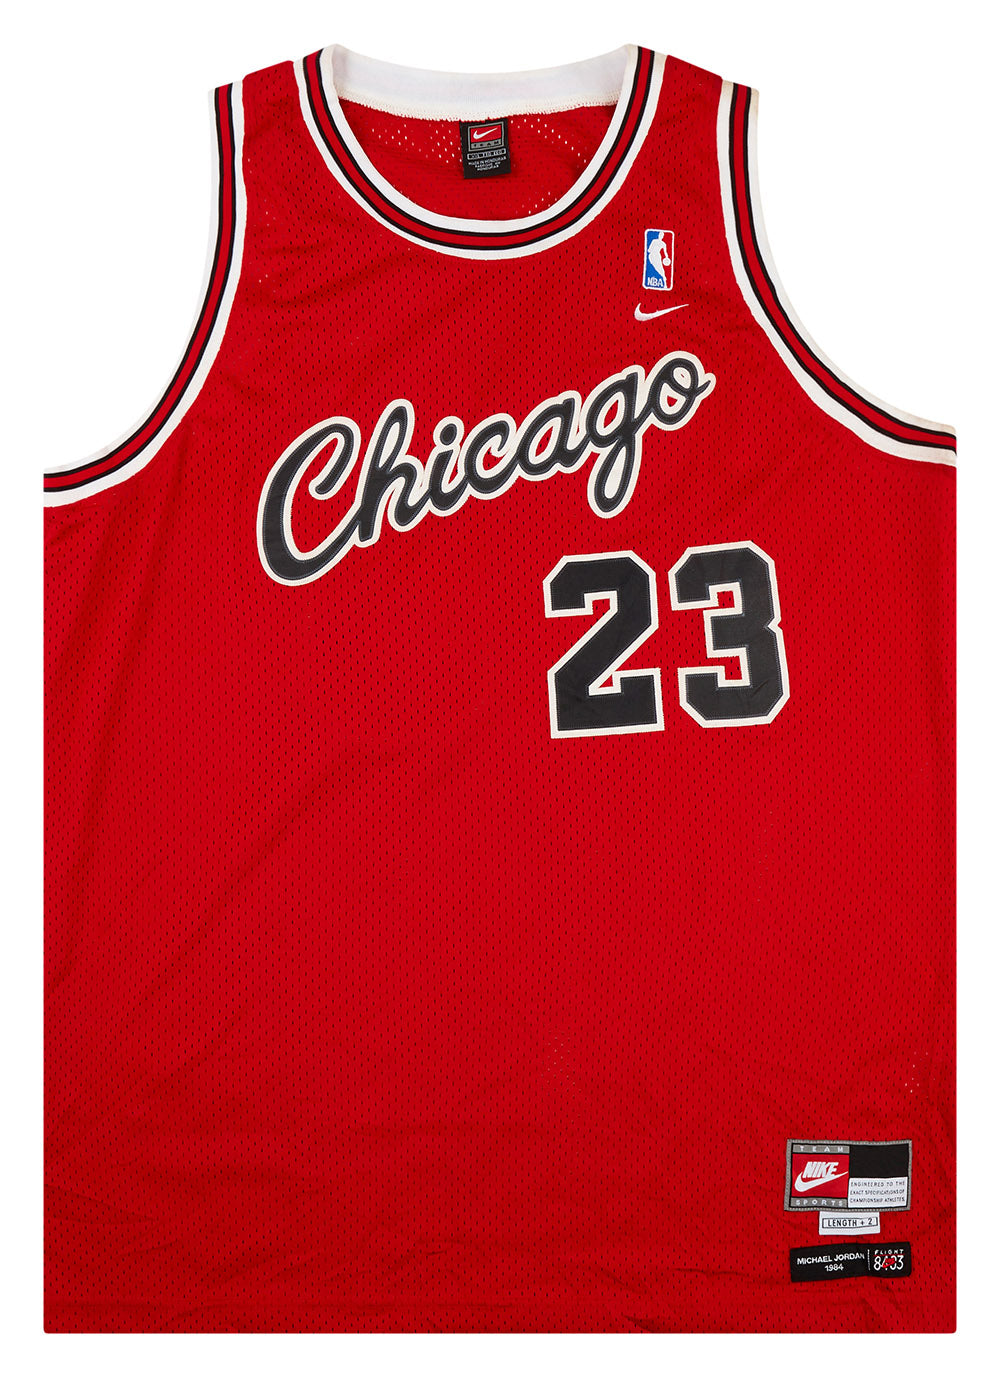 Vintage Michael Jordan Chicago White Sox Nike Shirt Size Large